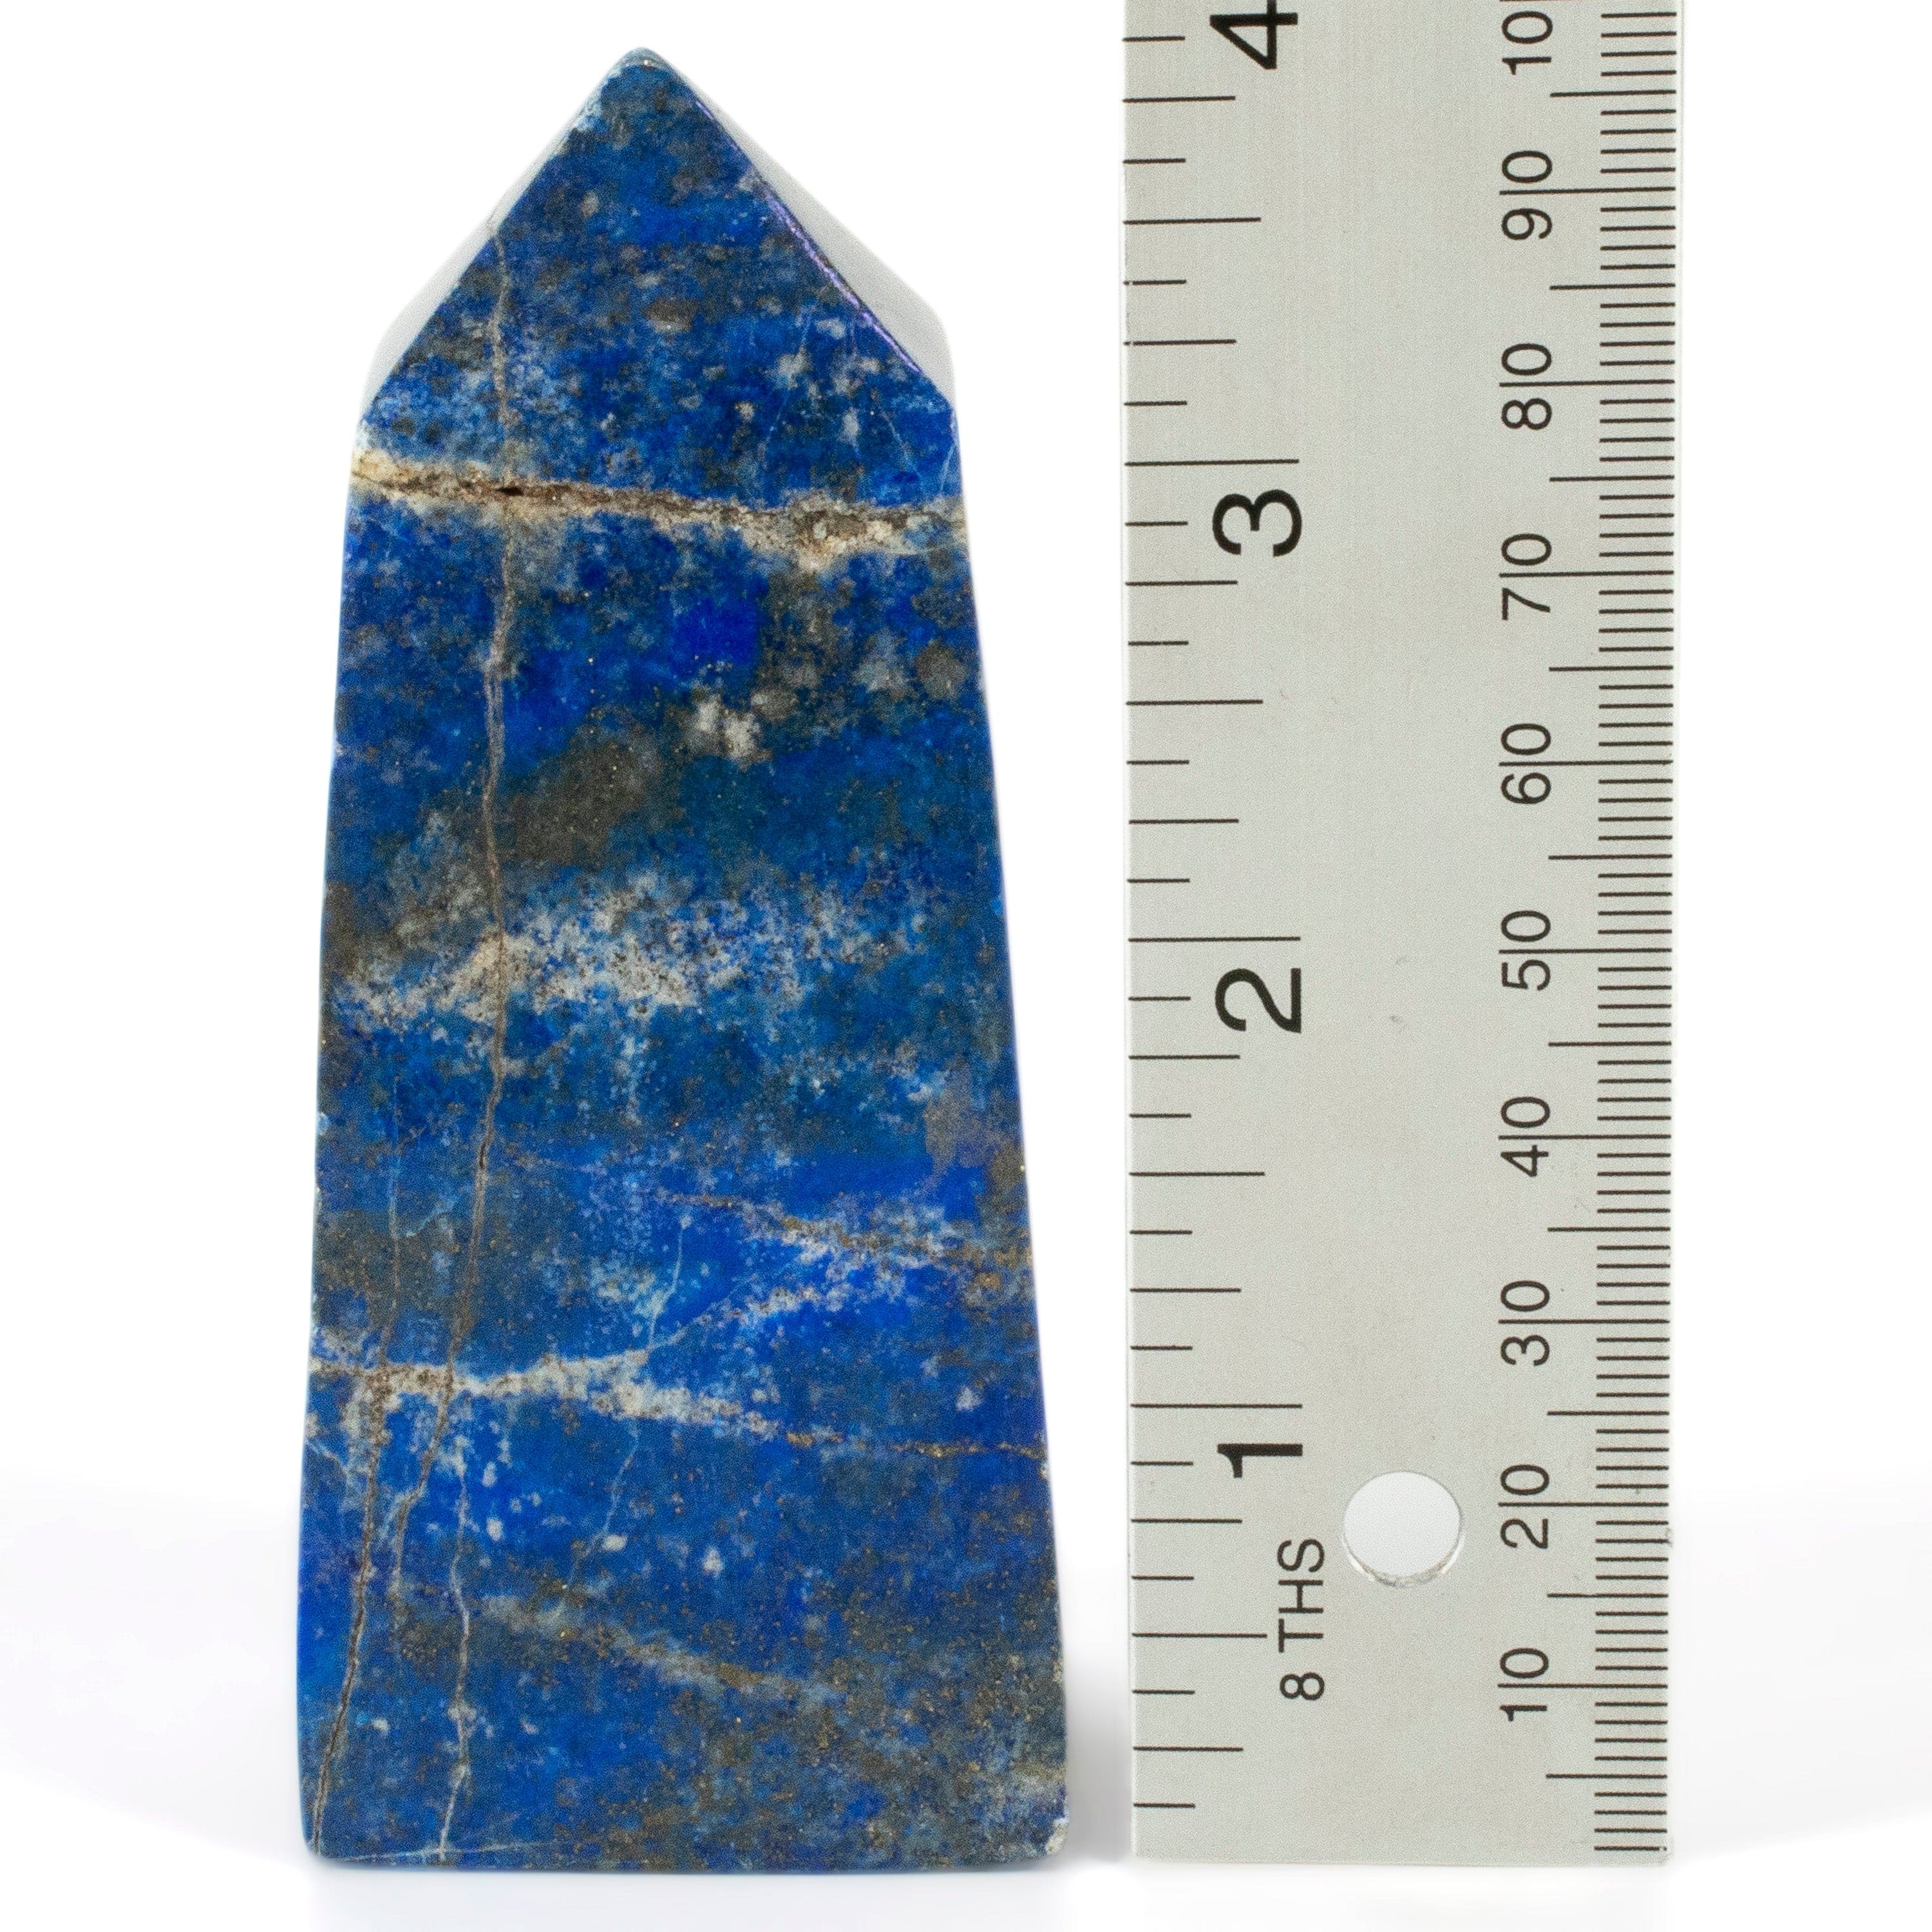 Kalifano Lapis Lapis Lazuli Polished Obelisk from Afghanistan - 4" / 334 grams LPOB700.002